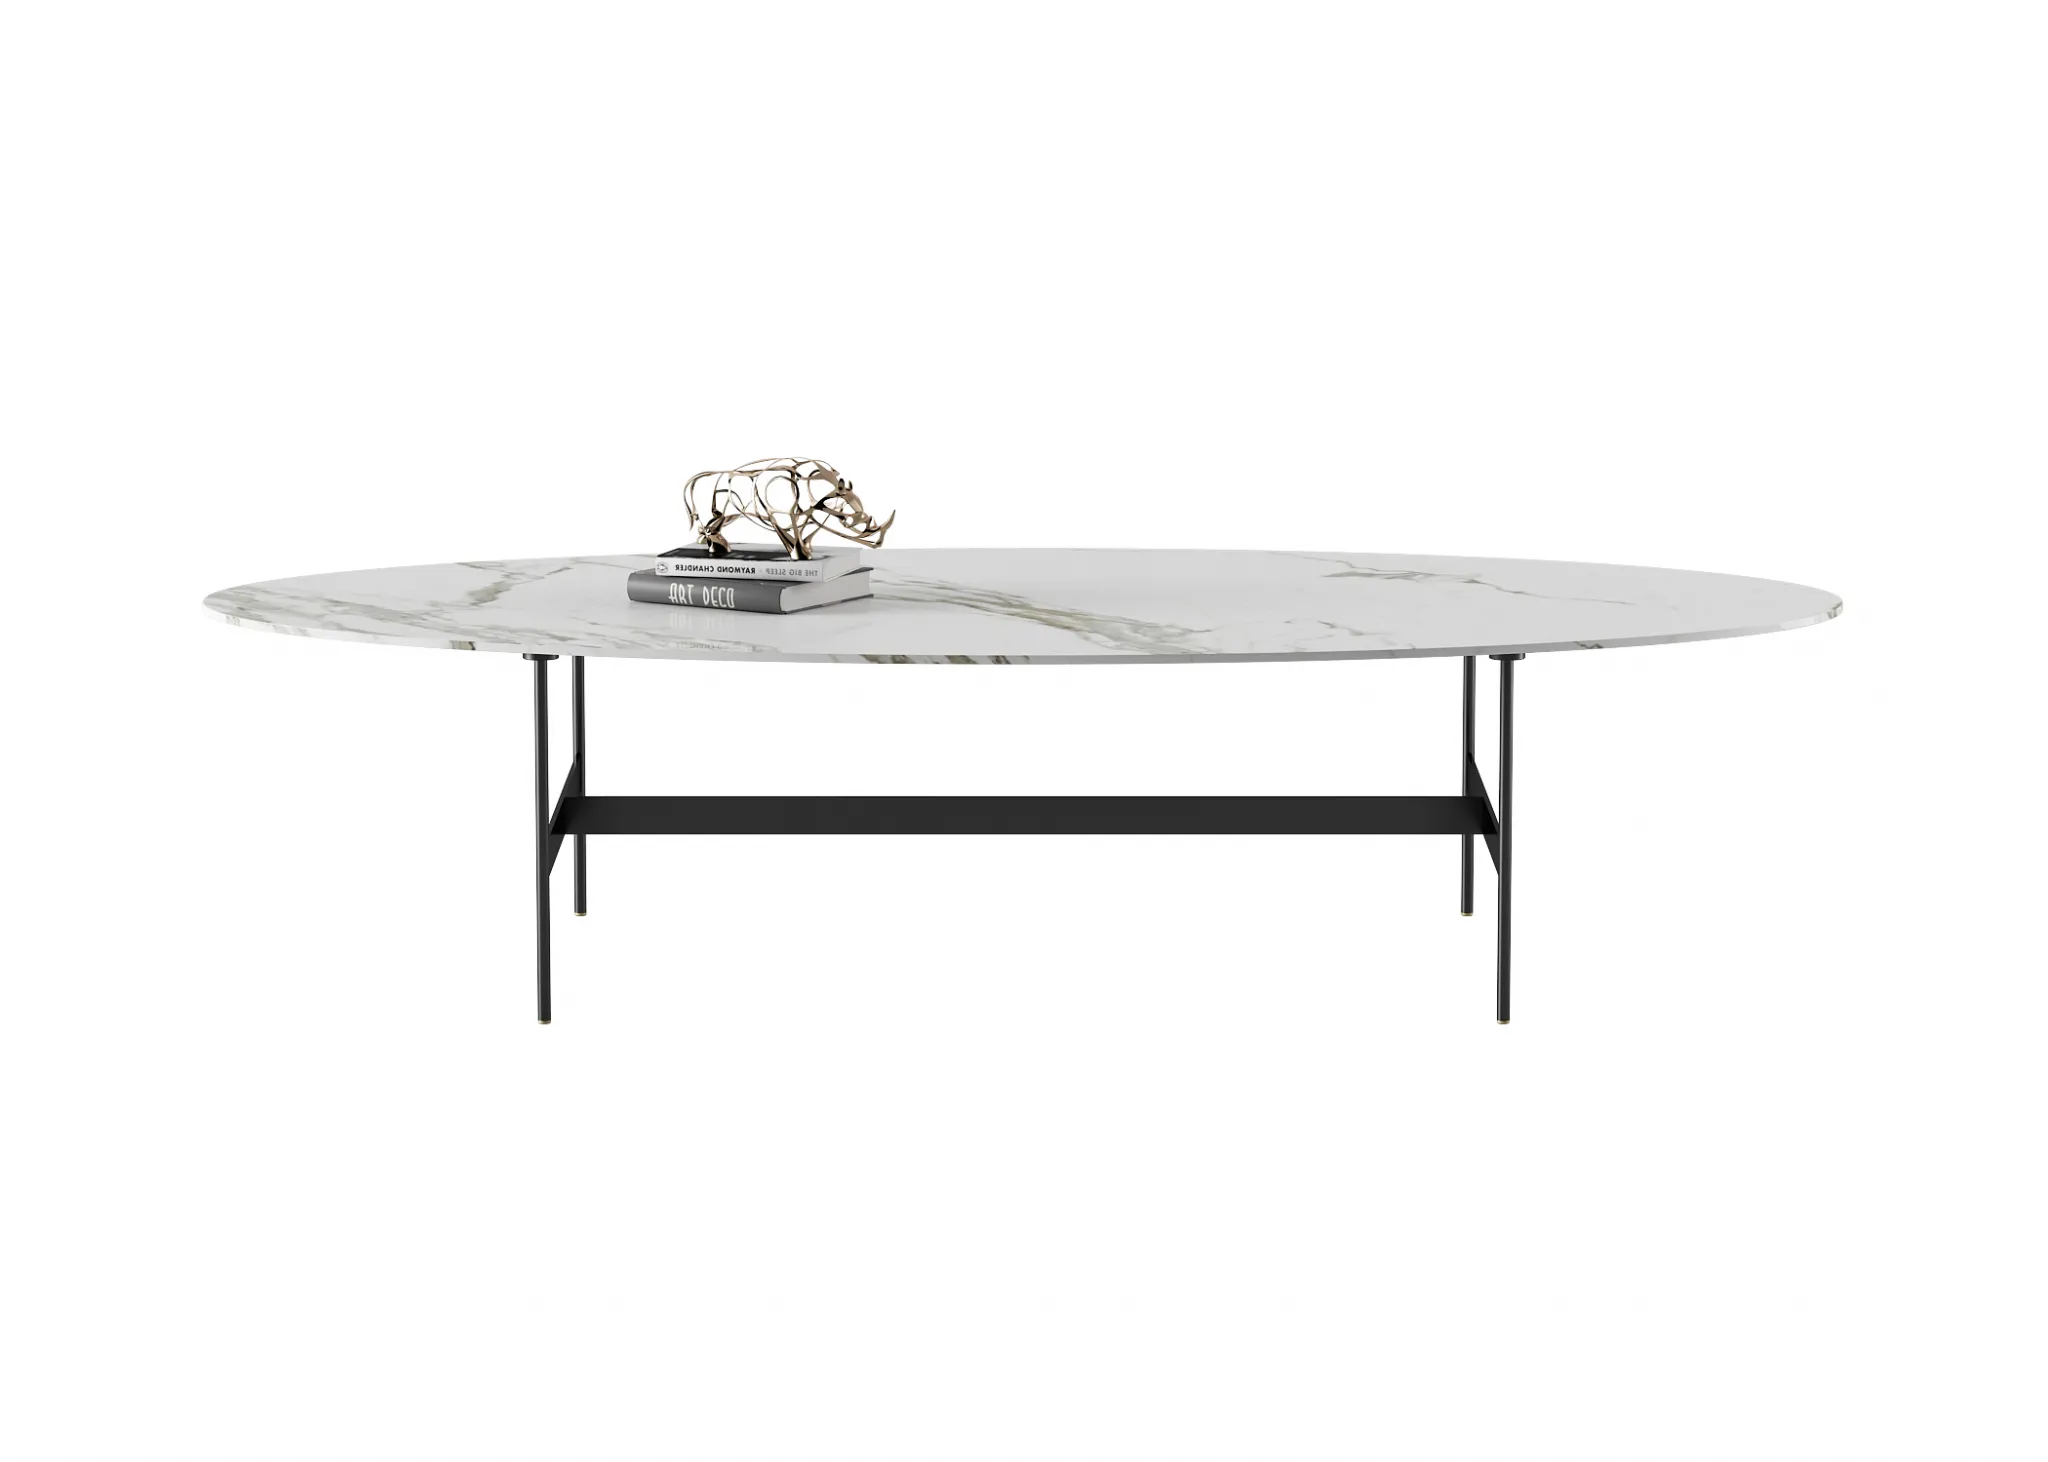 FURNITURE 3D MODELS – TABLES – 0121